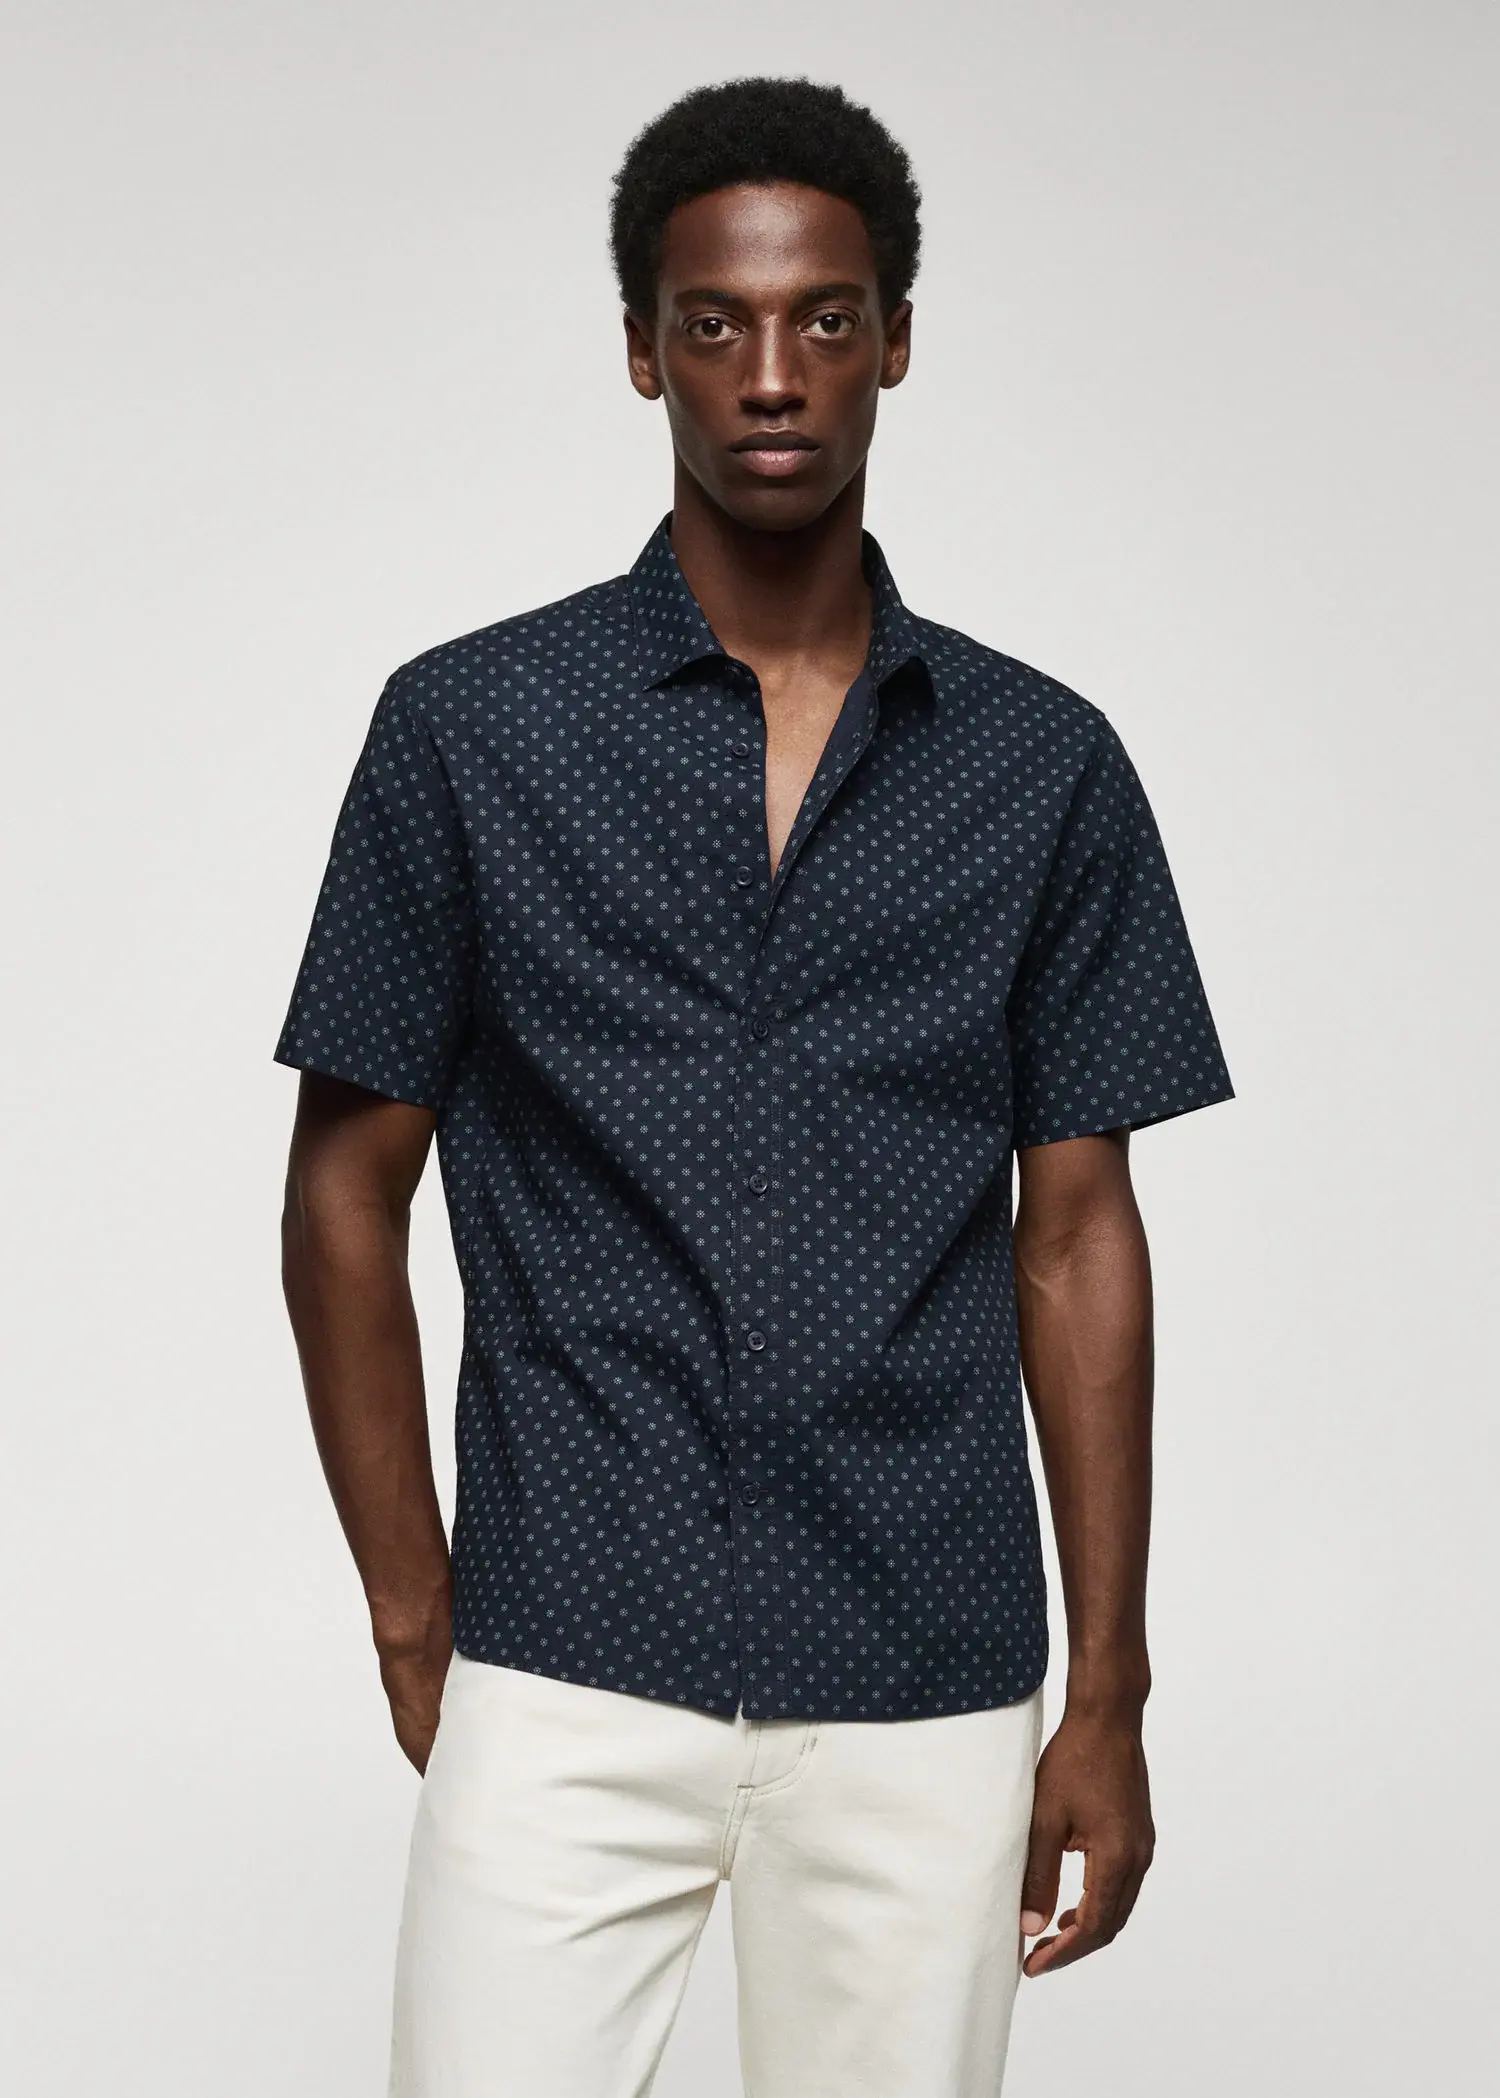 Mango 100% cotton short-sleeved floral shirt. 1